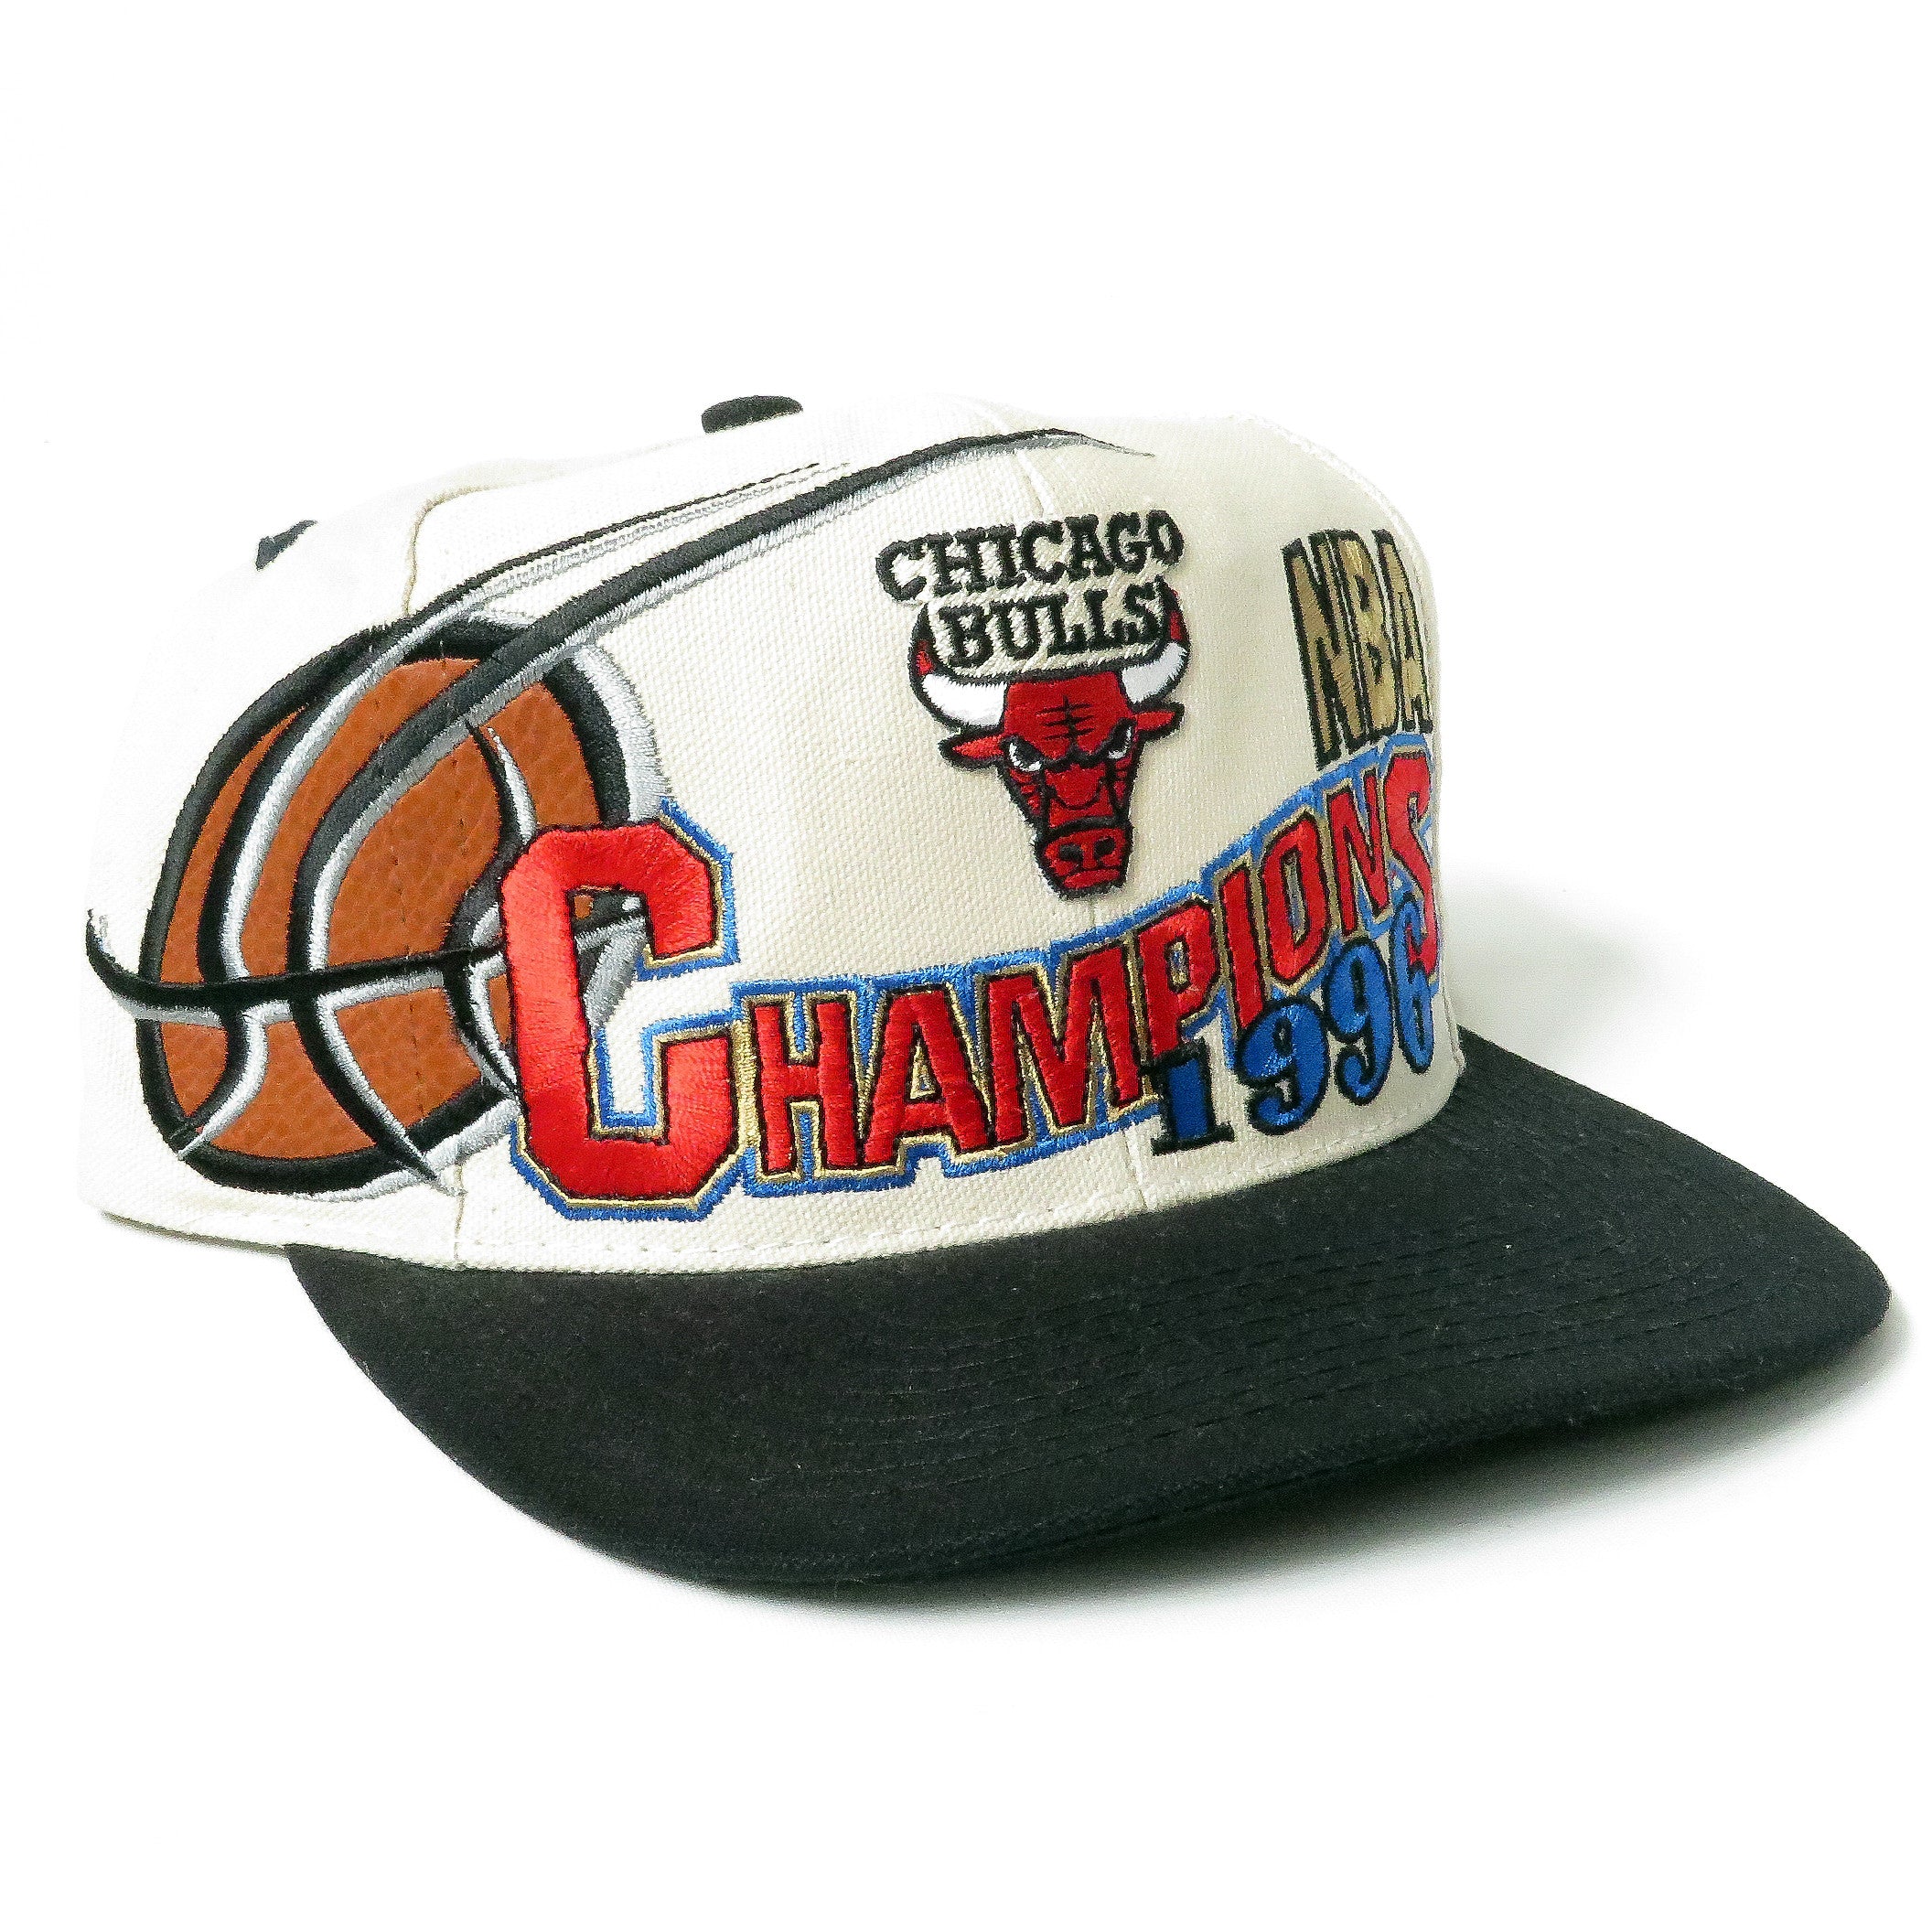 Vintage Chicago Bulls 1996 NBA Champions Snapback Hat